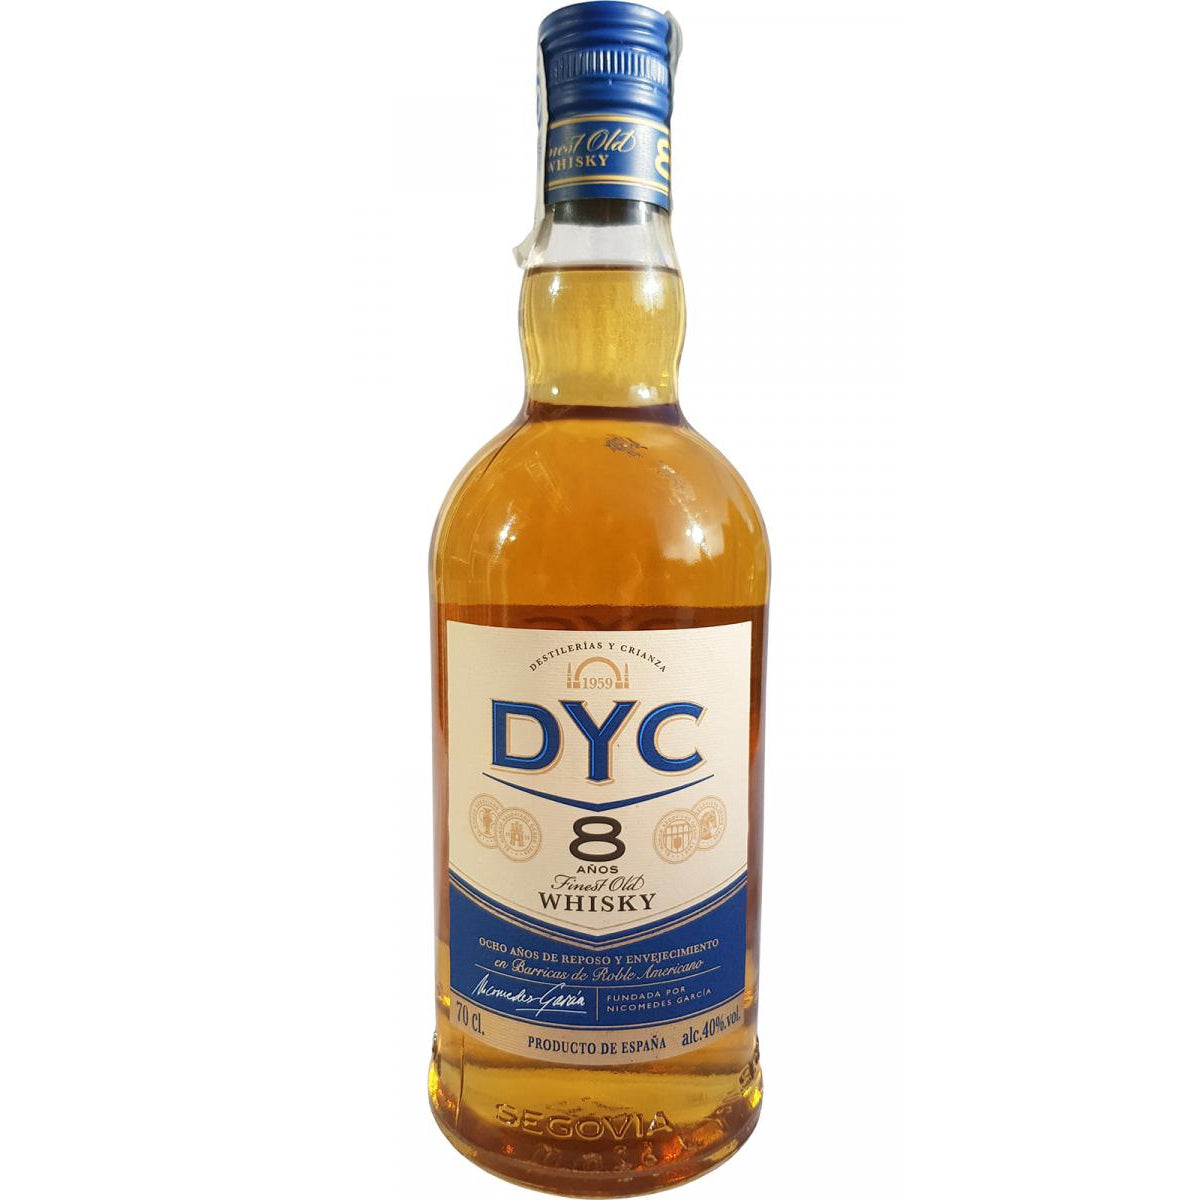 DYC Destilerias y Crianza 8 Years Old Whisky 40% Vol. 0,7l